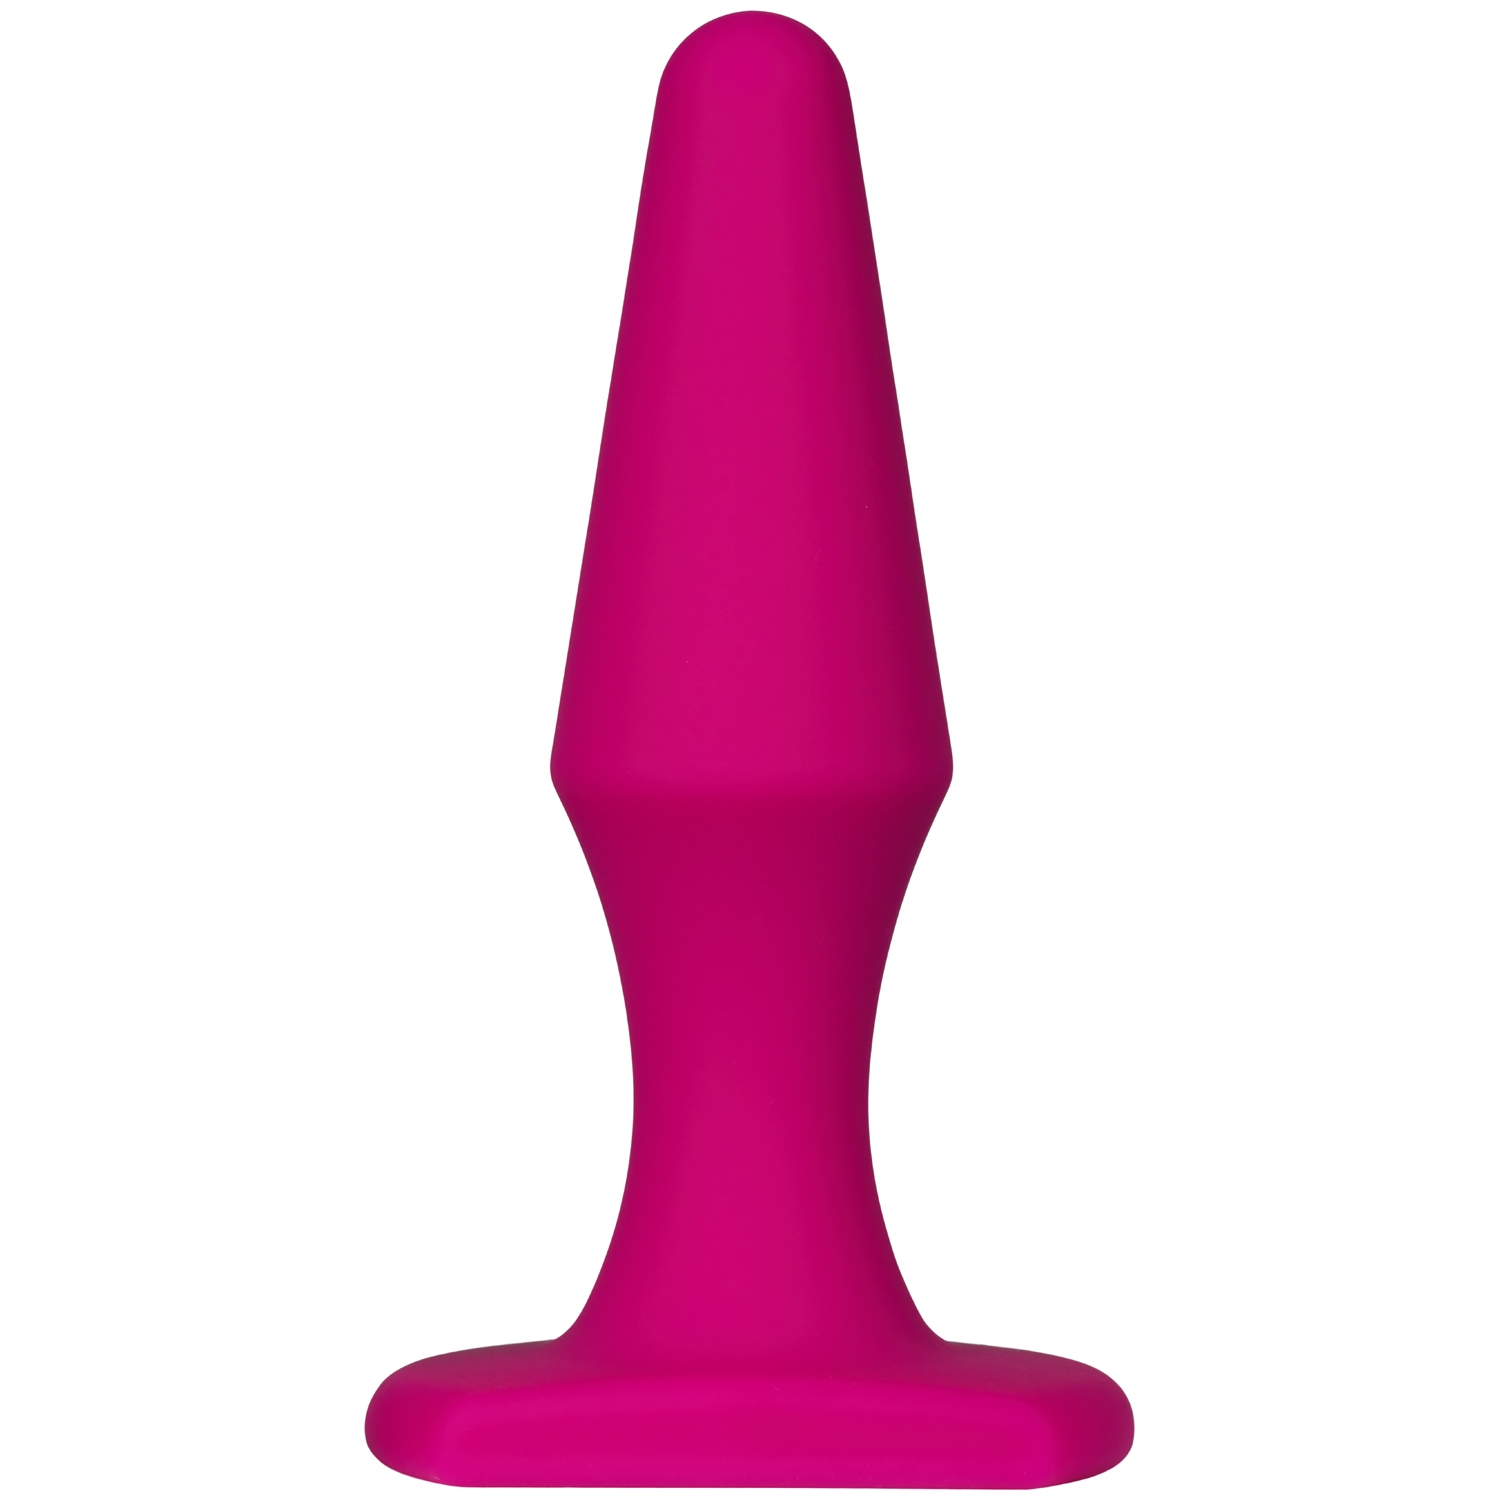 baseks Beginner Pink Analplugg - Ljusrosa | Favoriter//Kvinnor//Analsexleksaker//Analpluggar//Buttplug//Anal Nybörjare//Baseks//baseks Analsexleksaker//Analsexleksaker för kvinnor//Analpluggar för kvinnor//Analt för kvinnor Nybörjare//3 för 249:- | Intimast